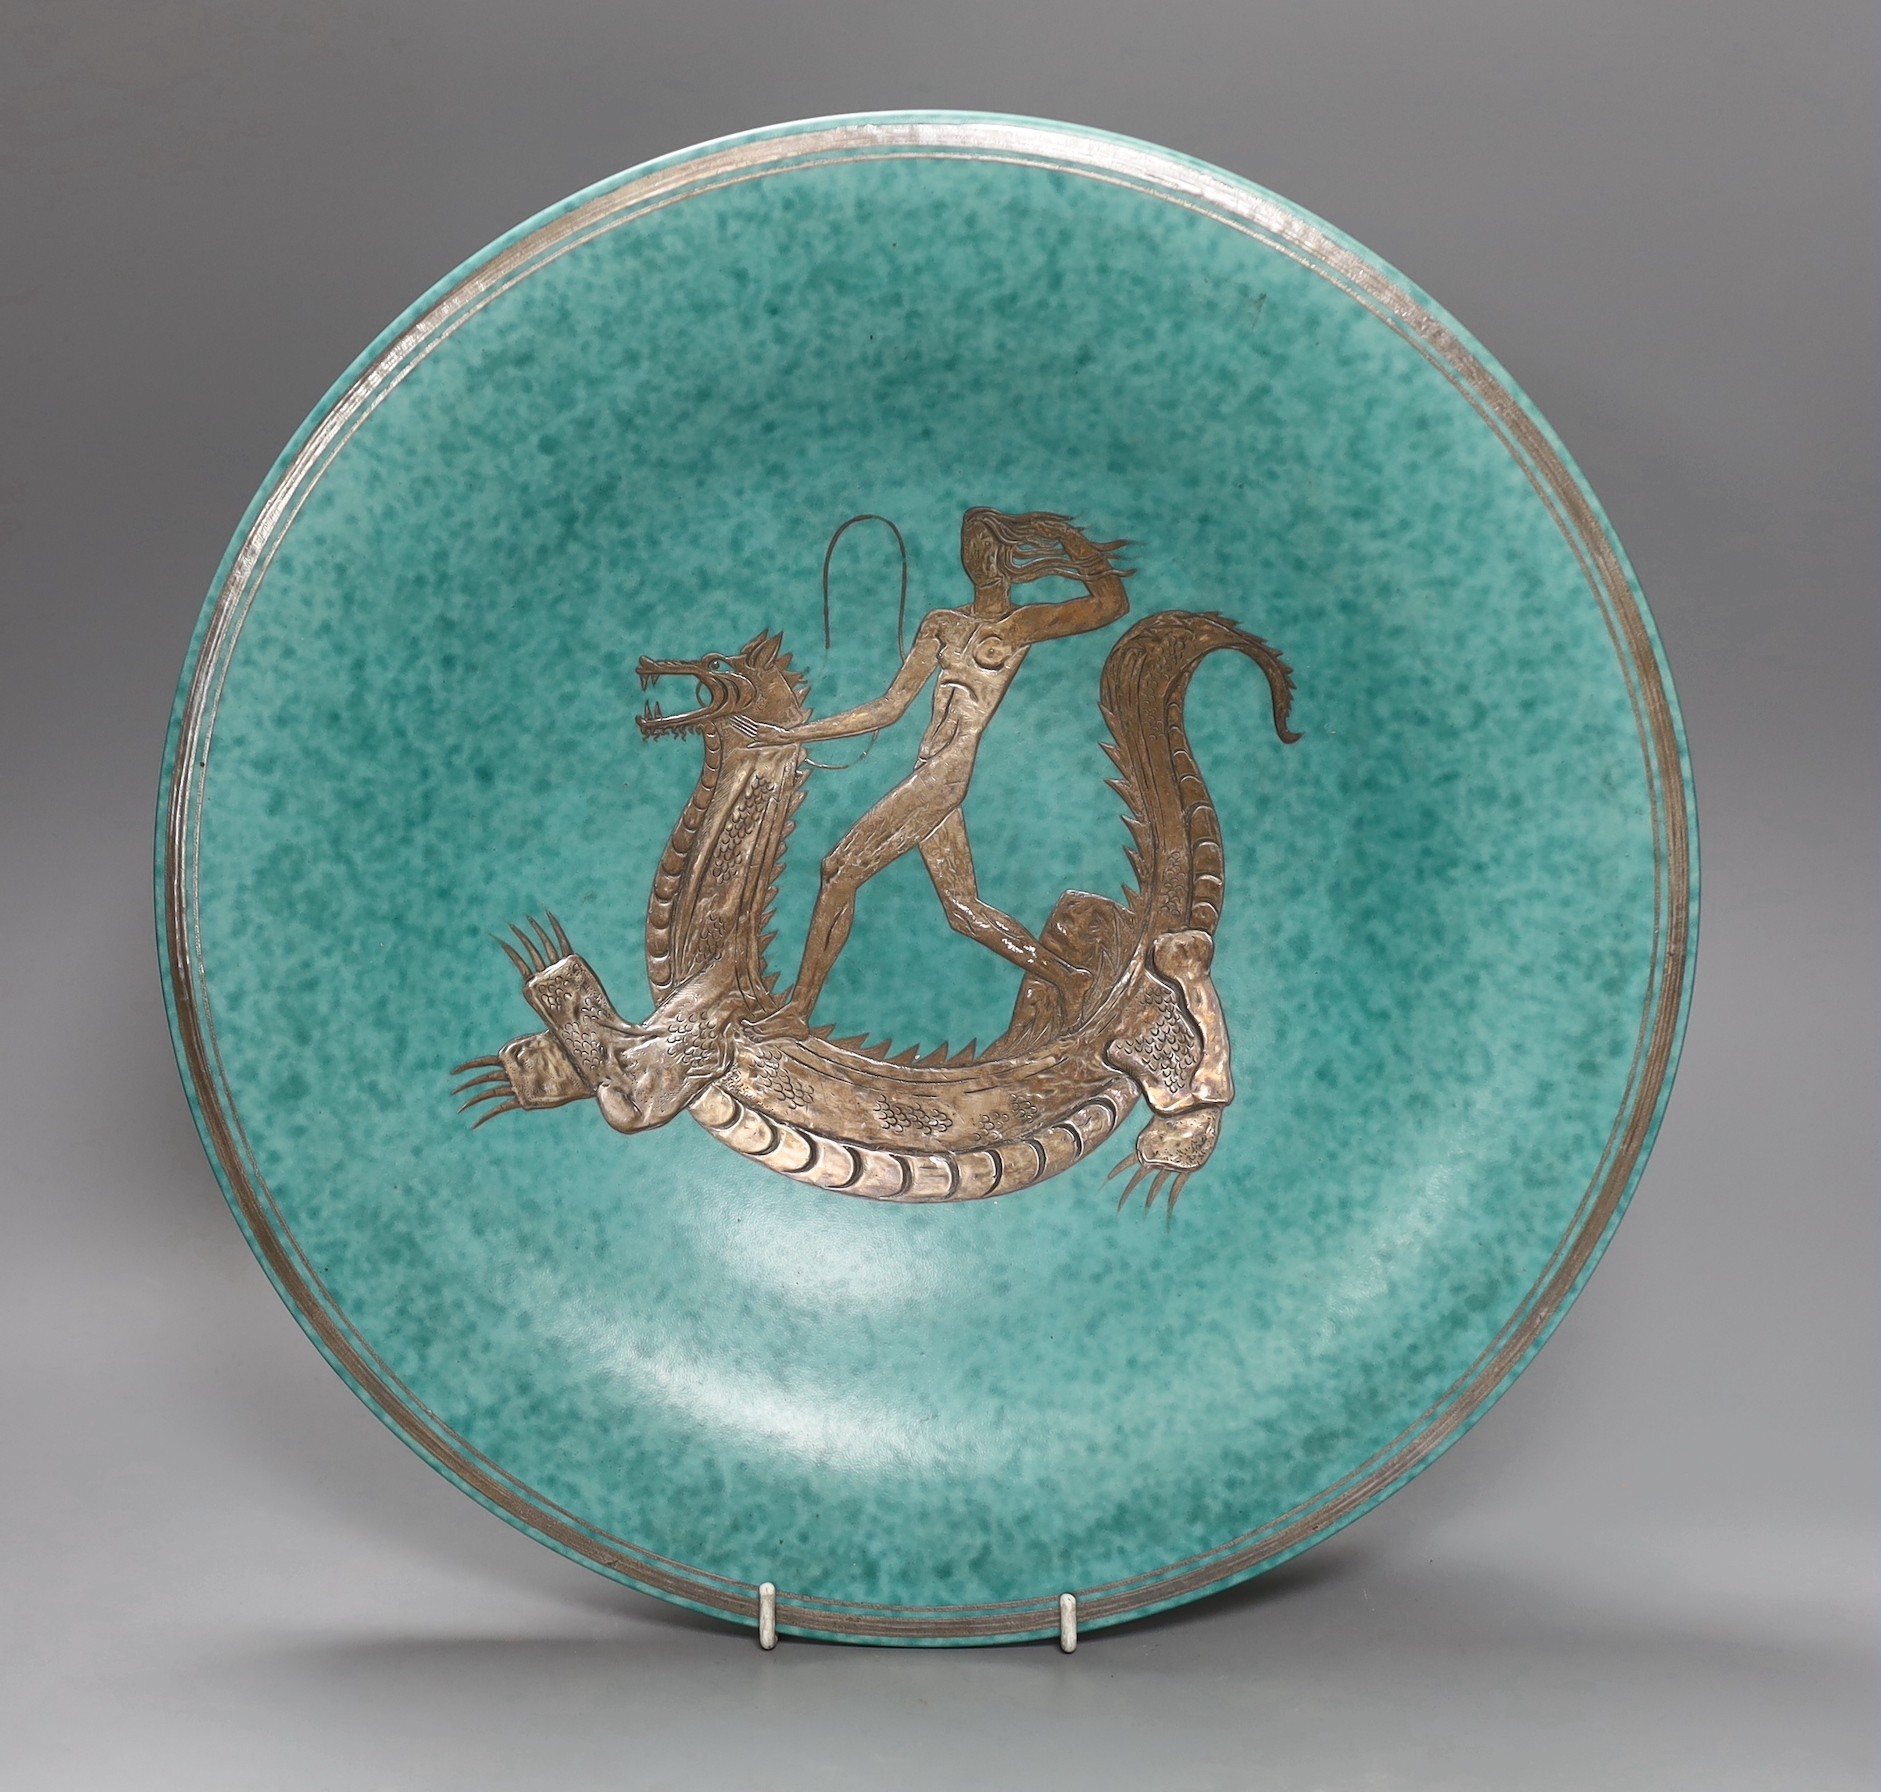 A Gustavsberg Wilhelm Kåge design Argenta bowl decorated with a figure riding a dragon, no. 1035, 38cm diameter